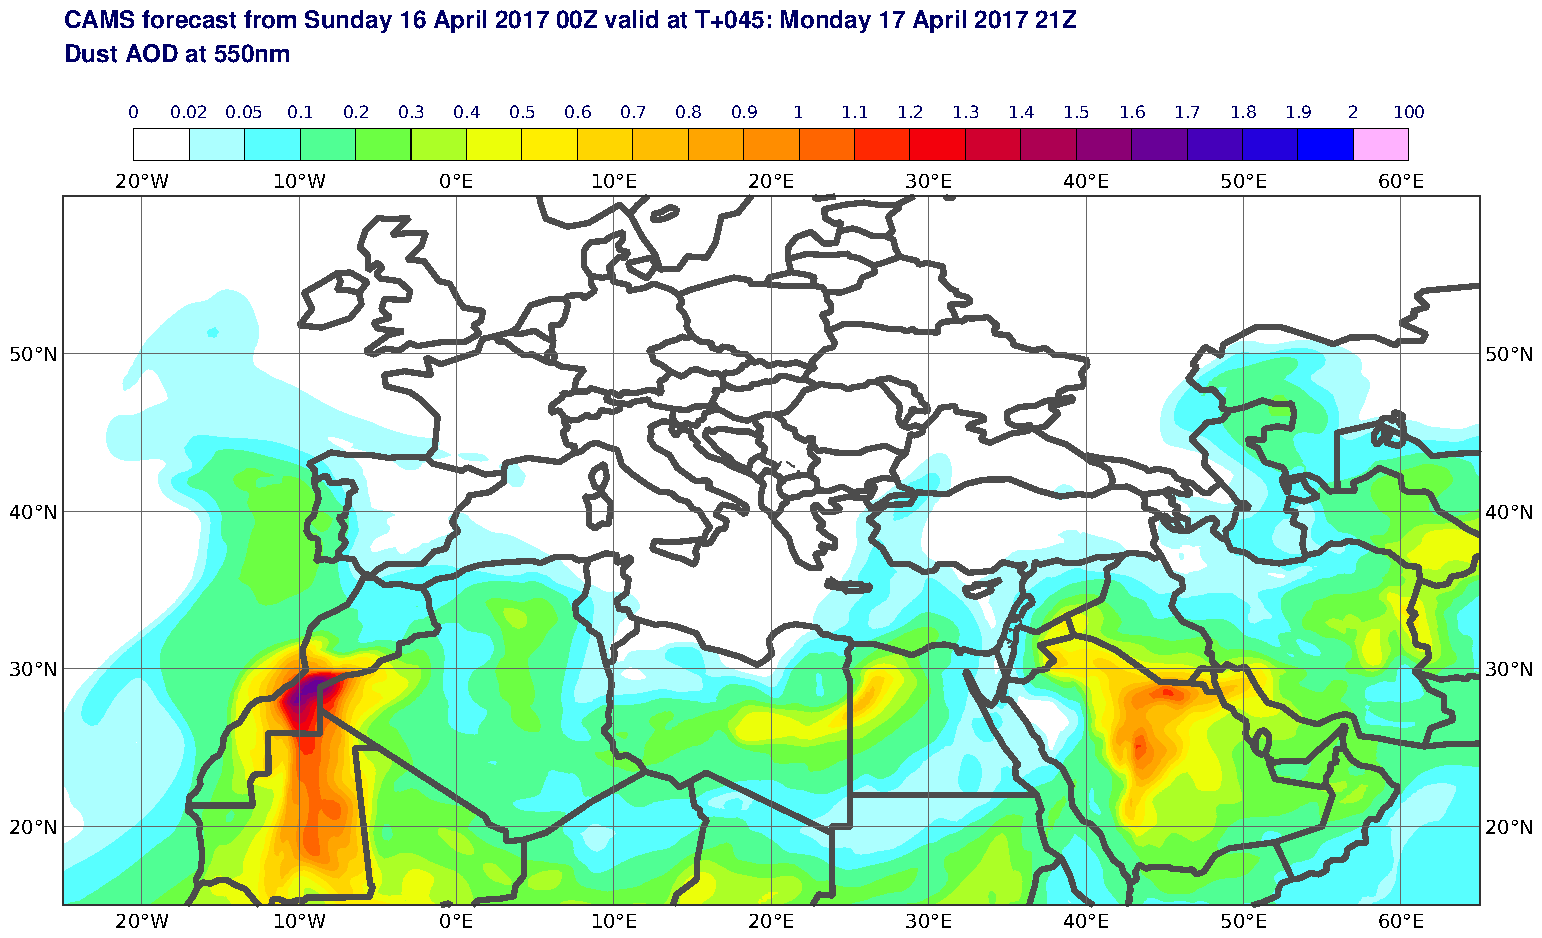 Dust AOD at 550nm valid at T45 - 2017-04-17 21:00